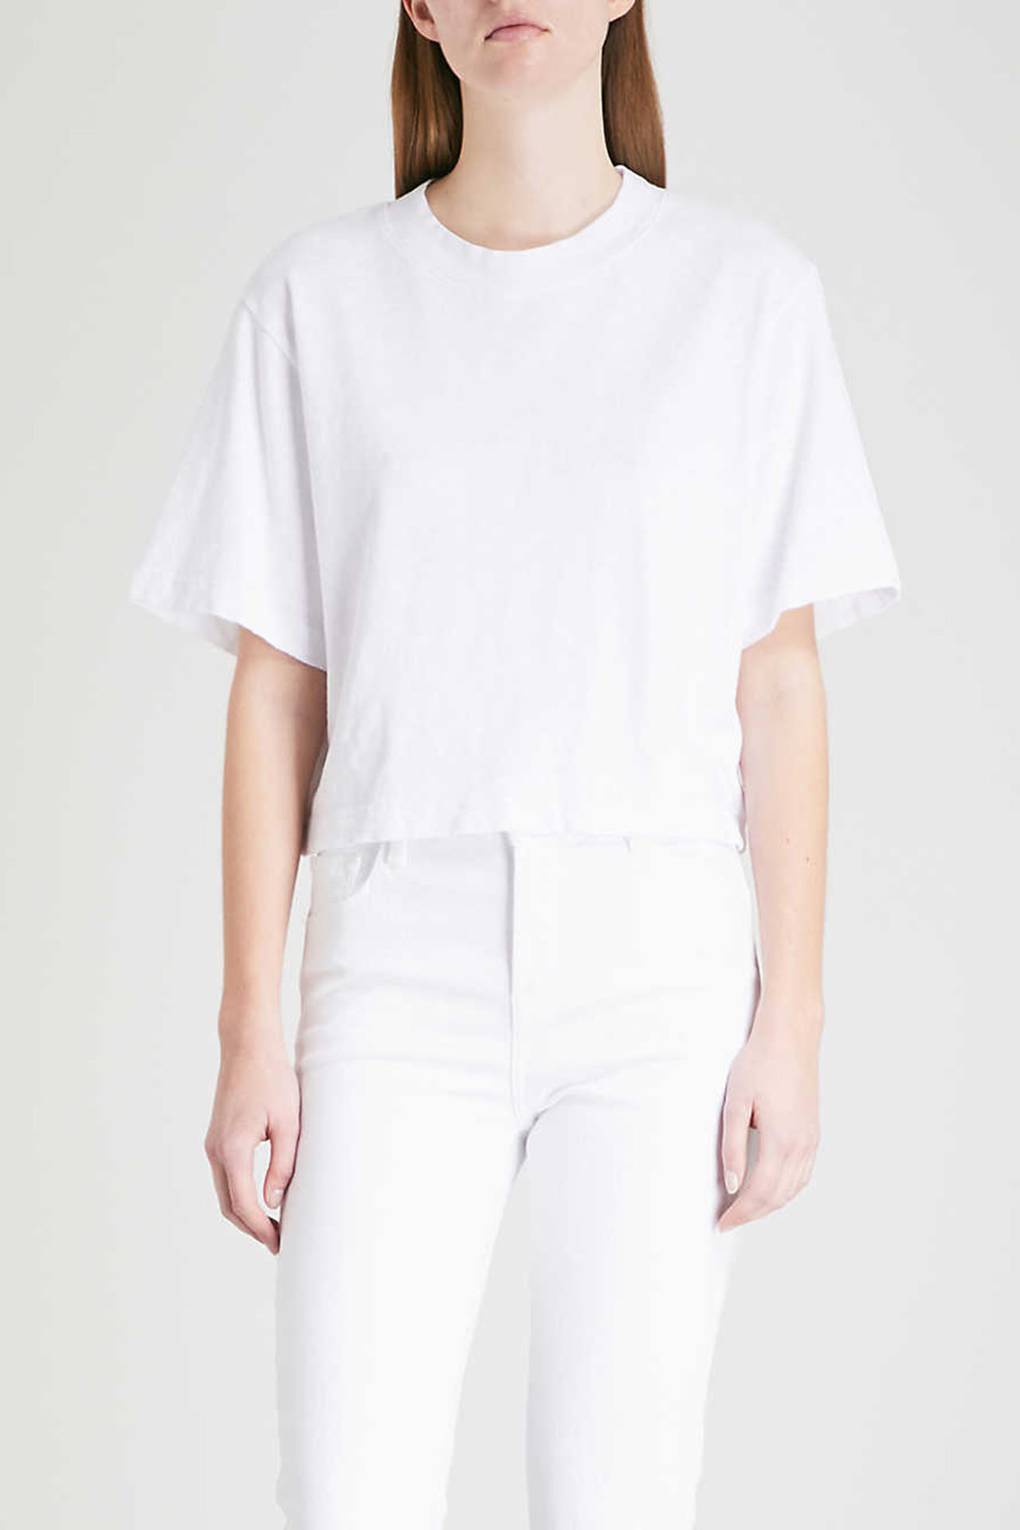 Best White T Shirt For Women Uk 21 White T Shirts To Shop Glamour Uk